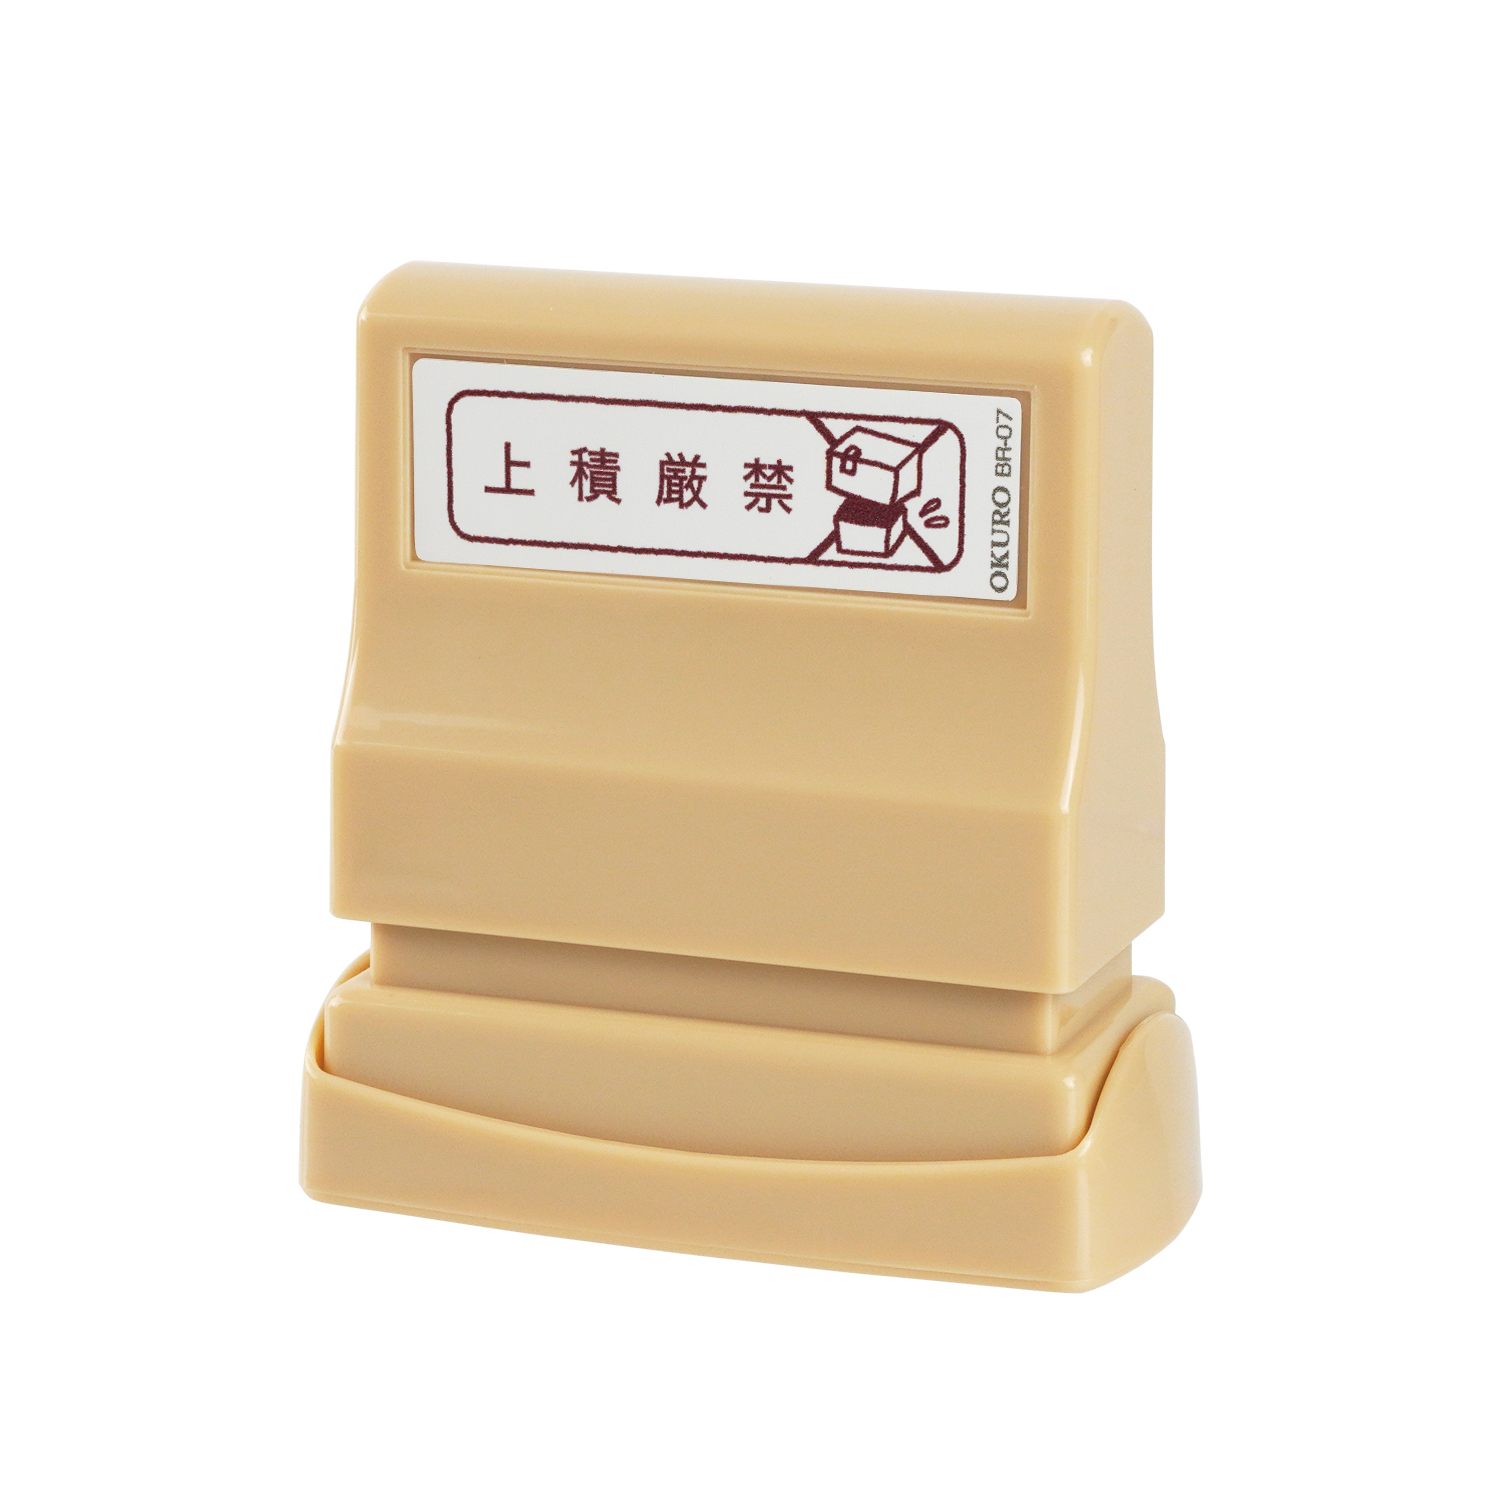 OKURO Sサイズ 茶 われもの注意|PEO-SA-BR-01|商品カタログ|シヤチハタ 